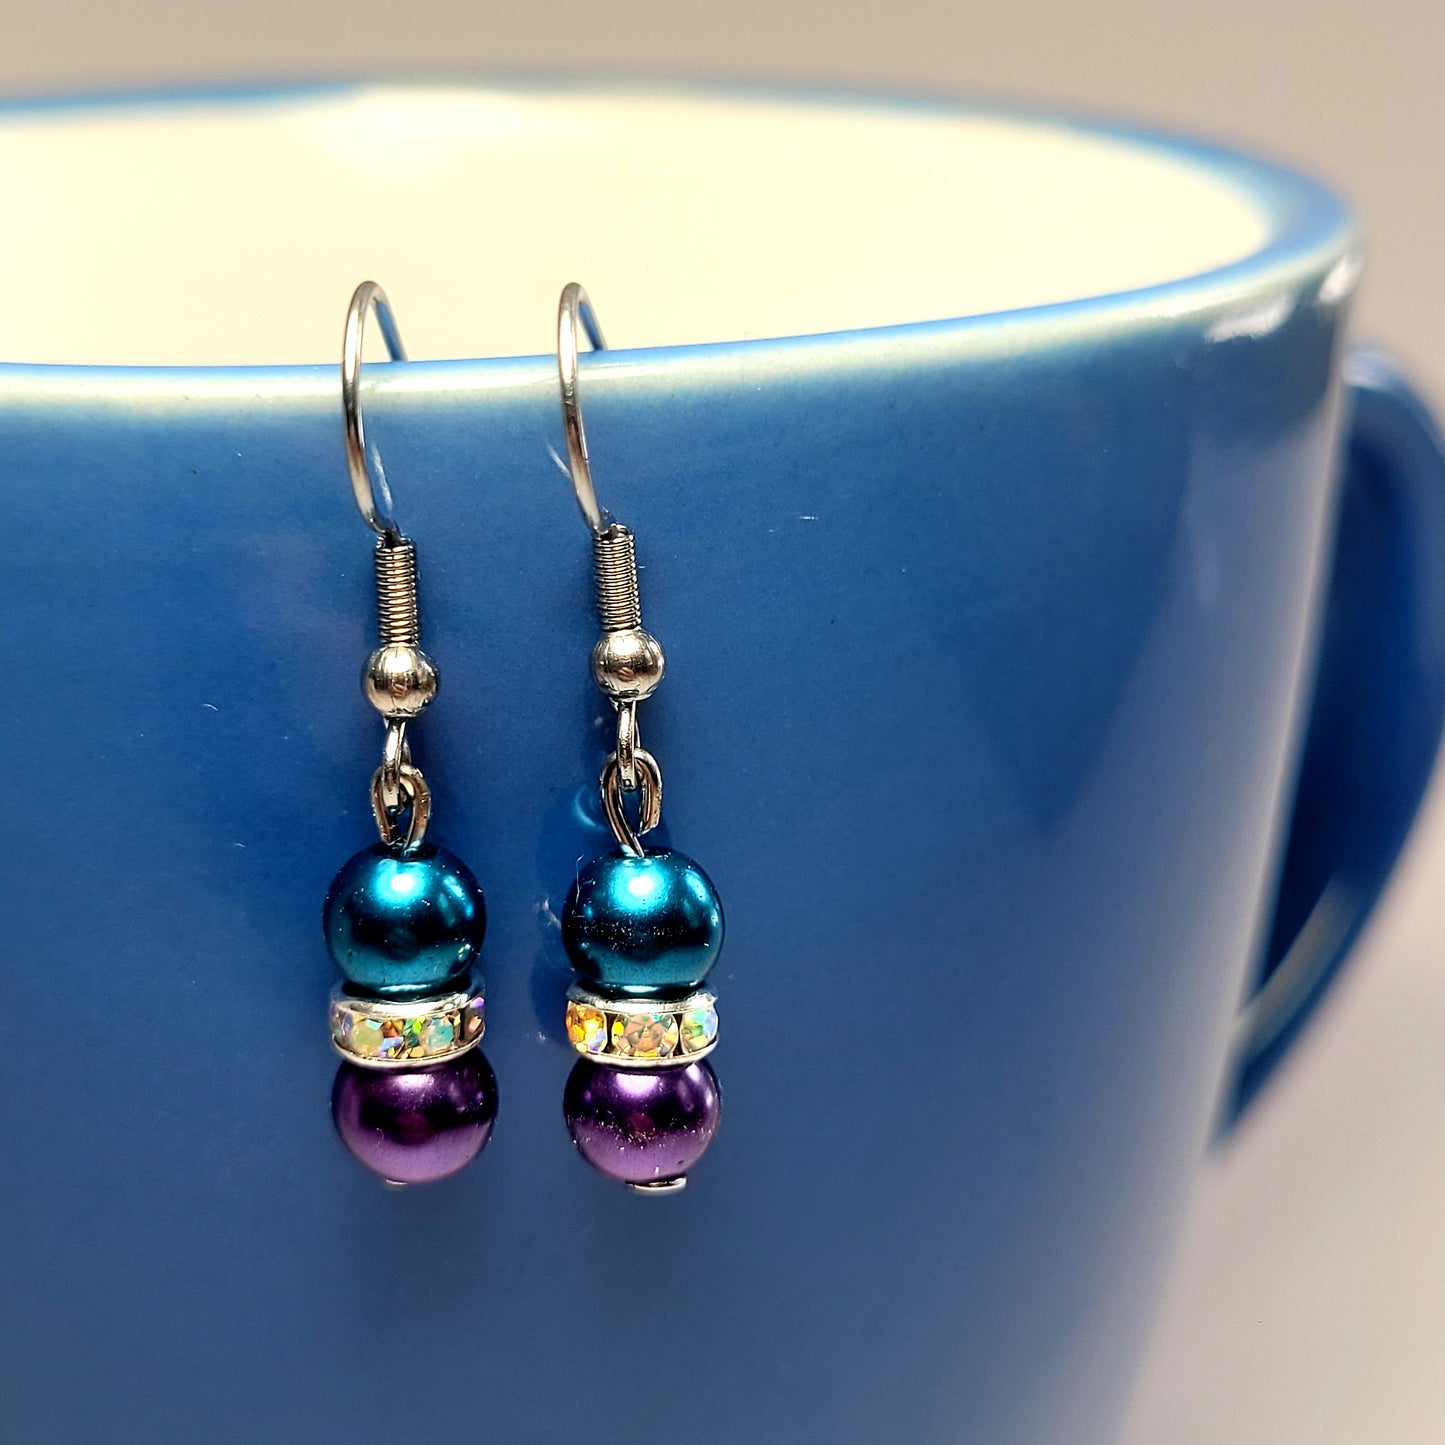 Earrings, blue and purple beads with diamonds